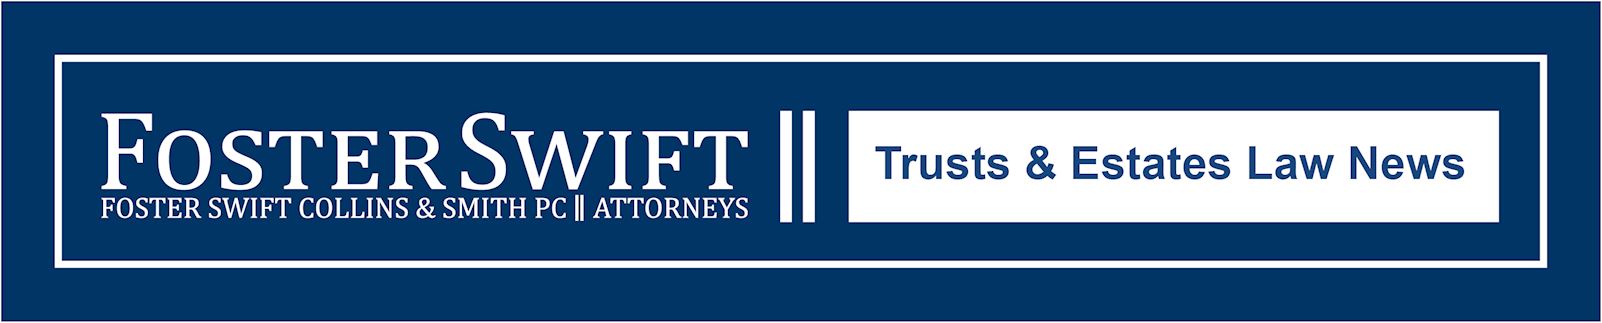 Trusts & Estates Law News